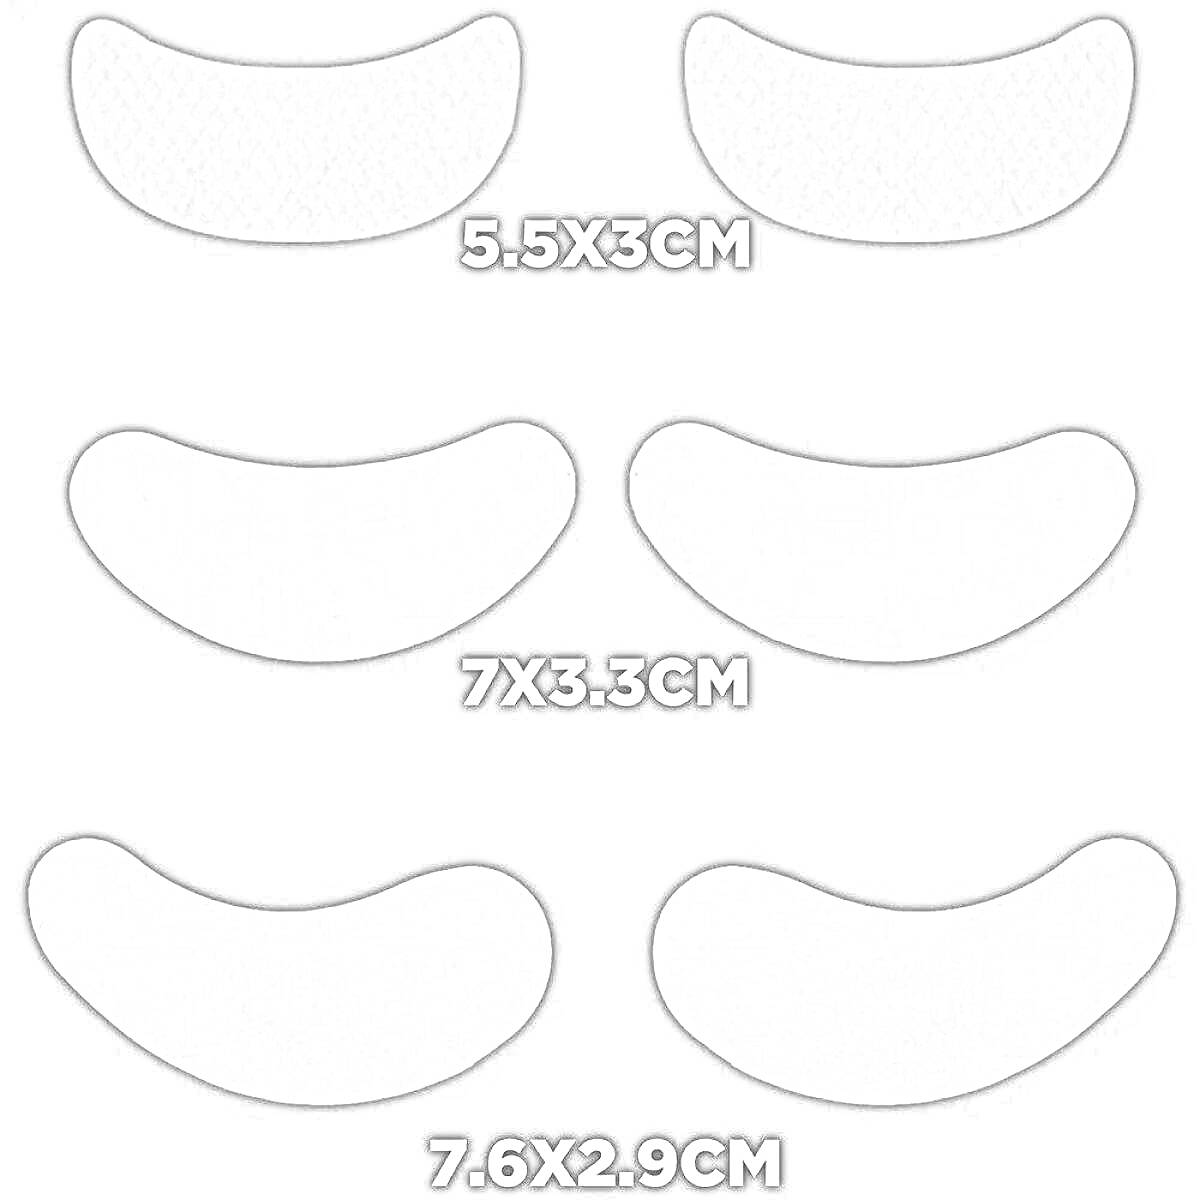 Раскраска Три размера патчей для глаз (5.5x3 см, 7x3.3 см, 7.6x2.9 см)